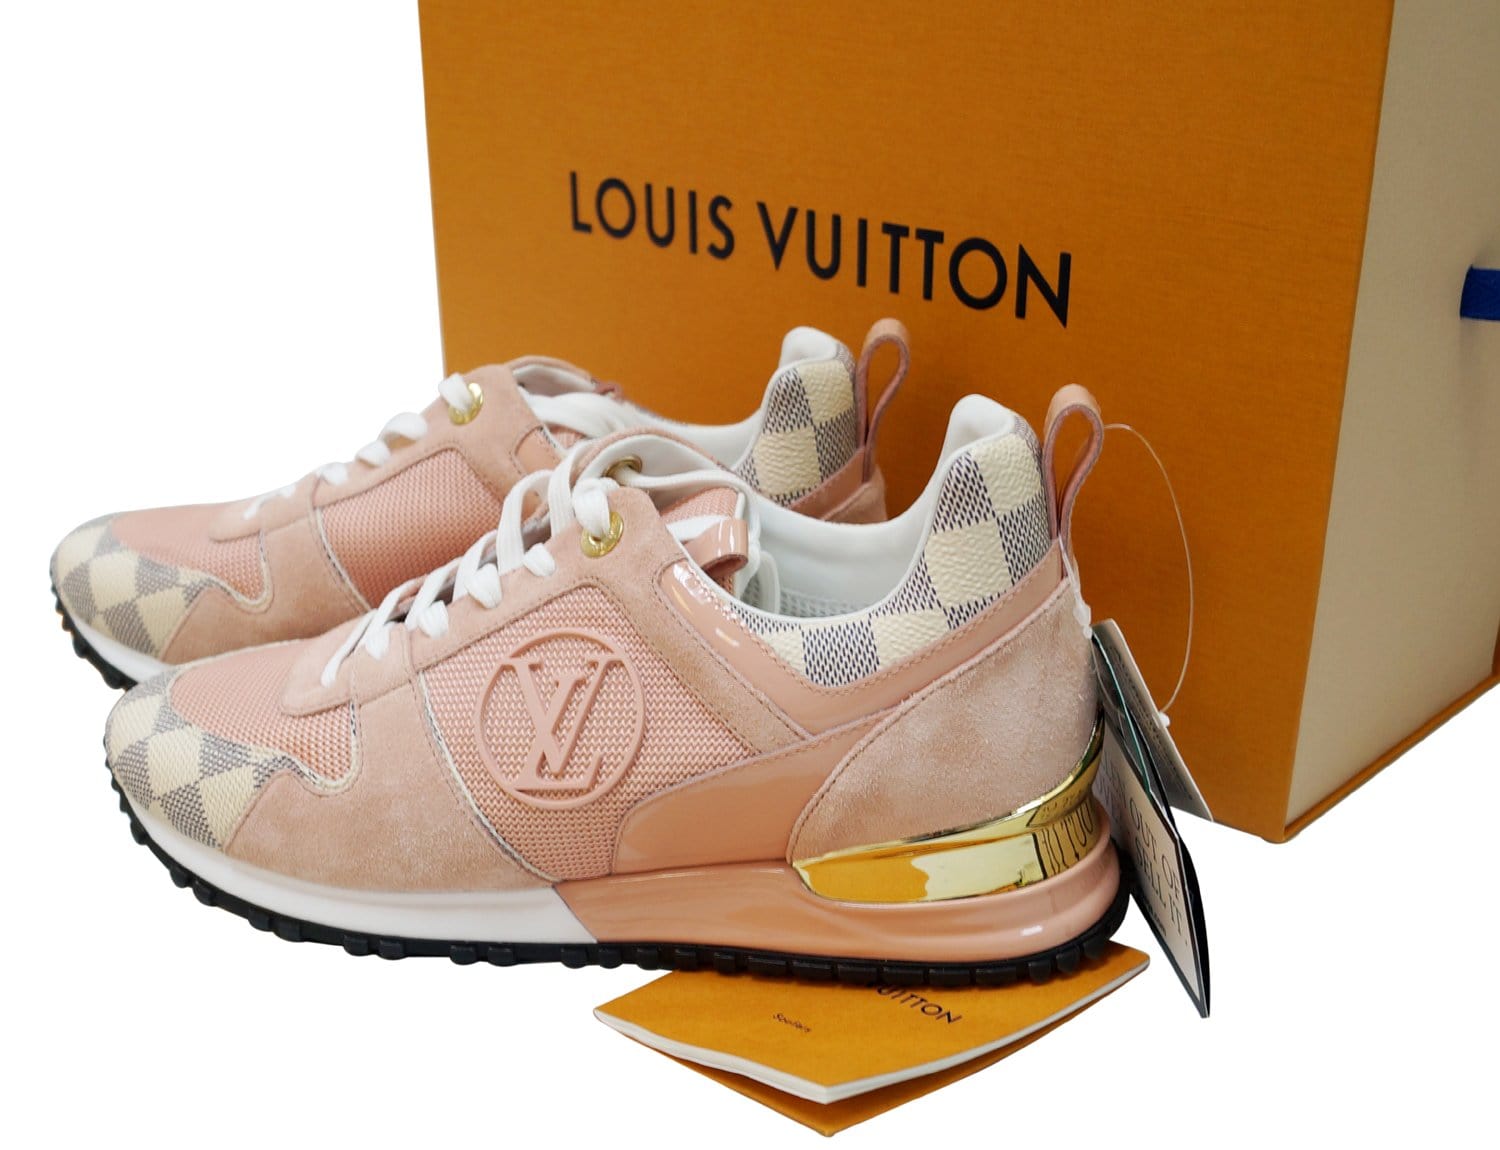 Louis Vuitton Run Away Sneaker Review